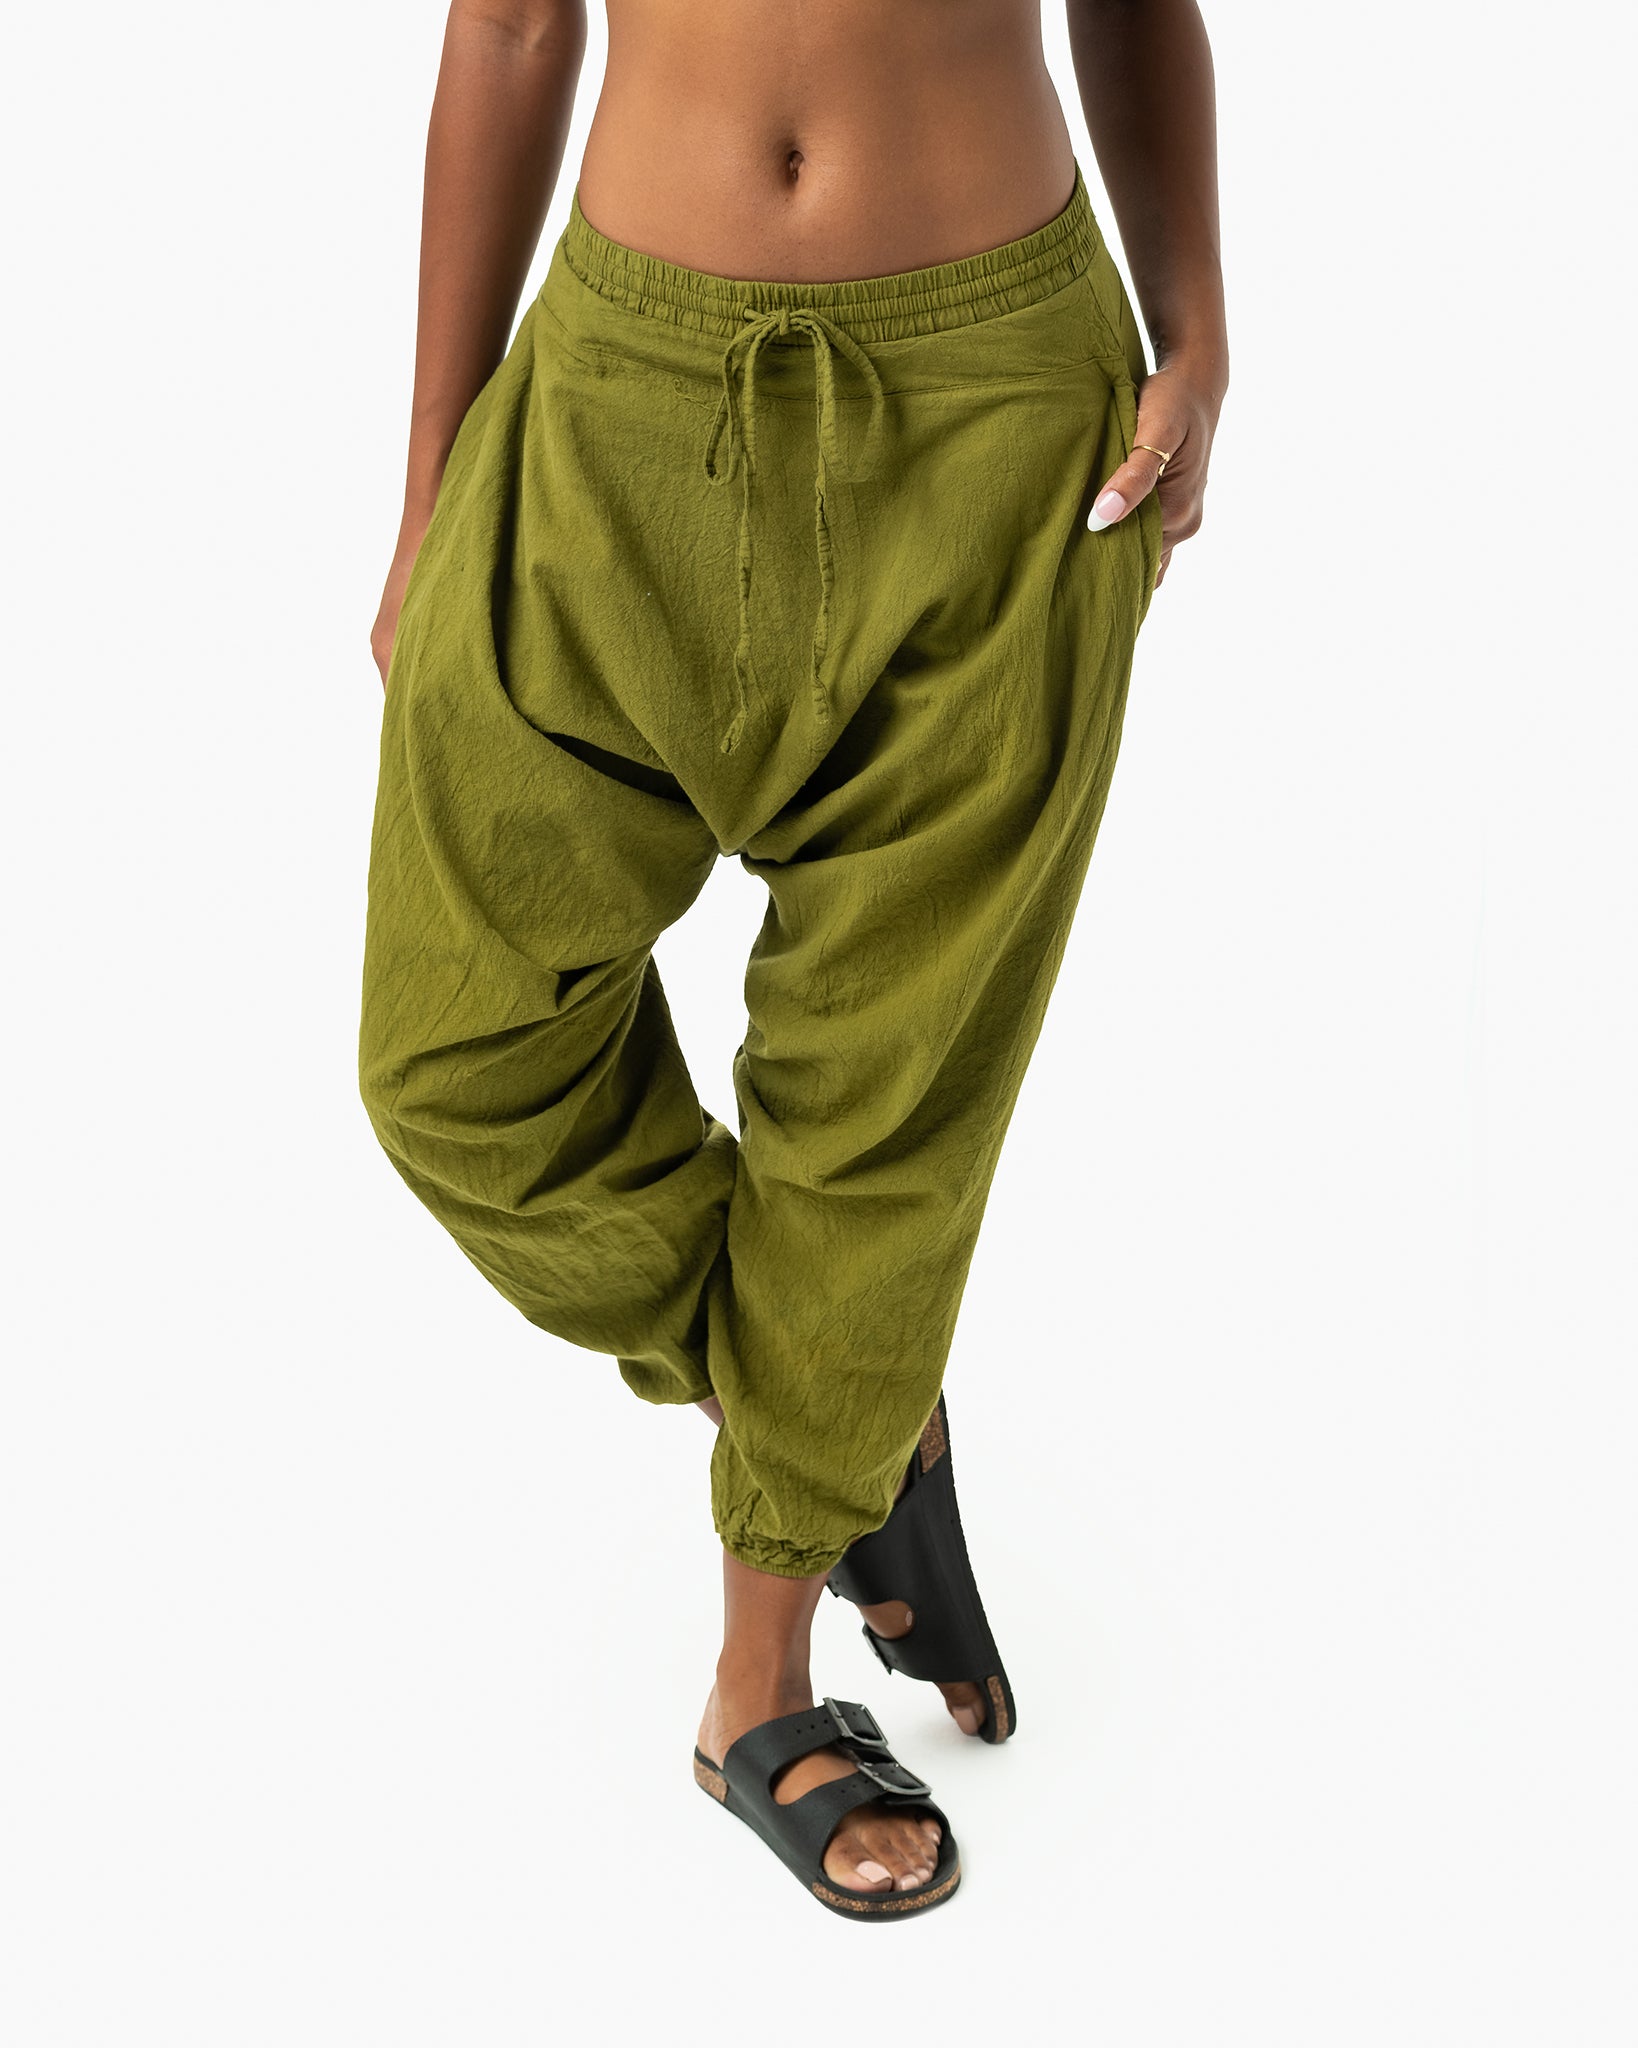 Women's Cropped Harem Pants Yoga Dropped Crotch,cuffed Green Pants Stretch  Cotton,loose Lounge Trousers XS-S,M,L-XL. 